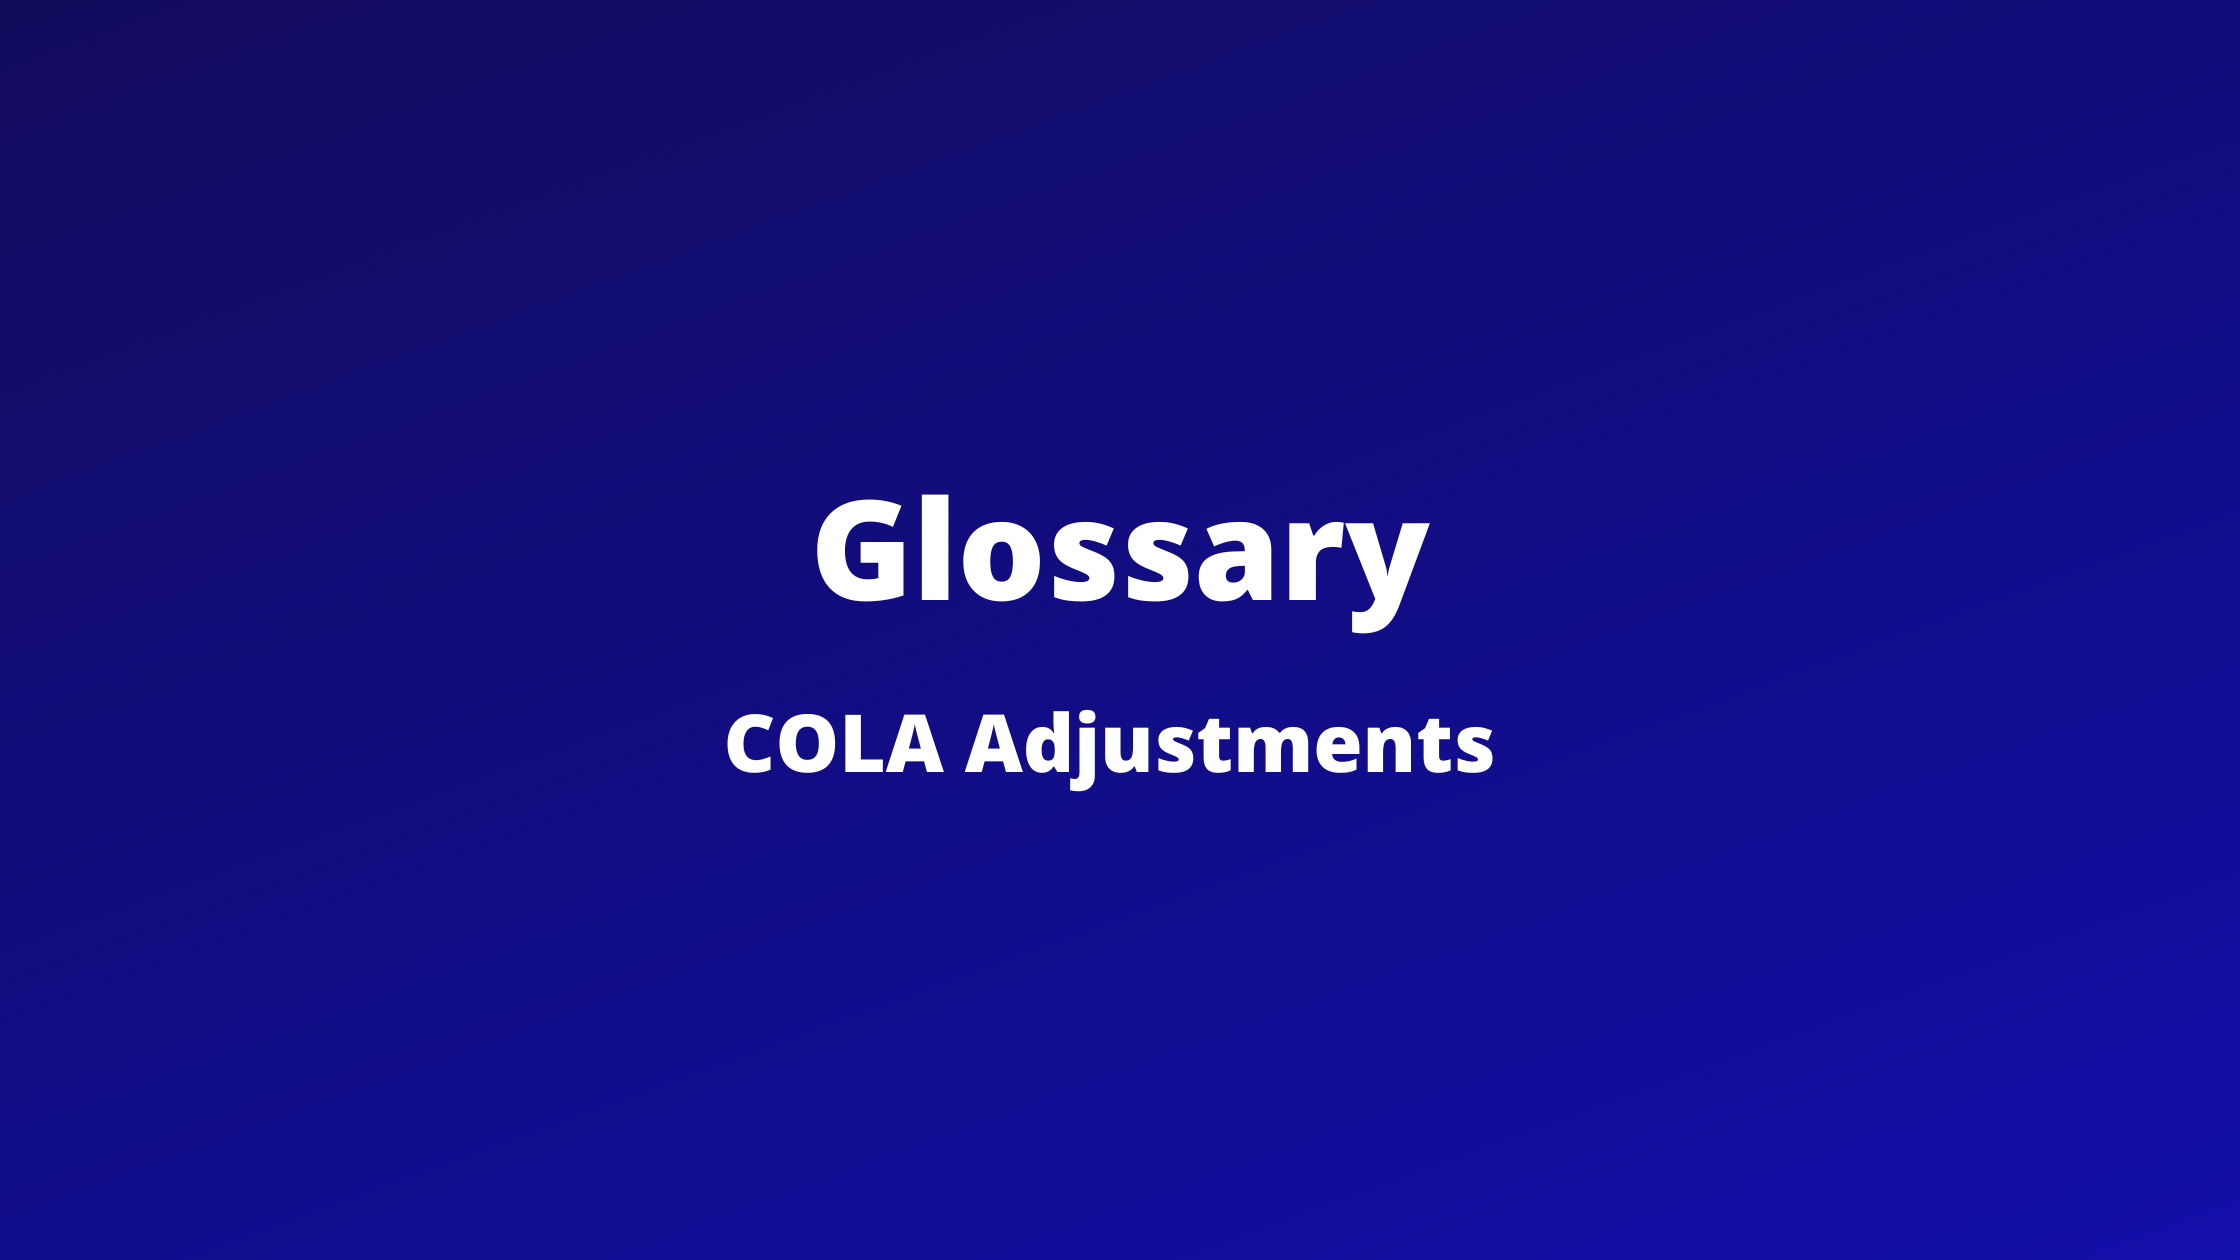 cola adjustments